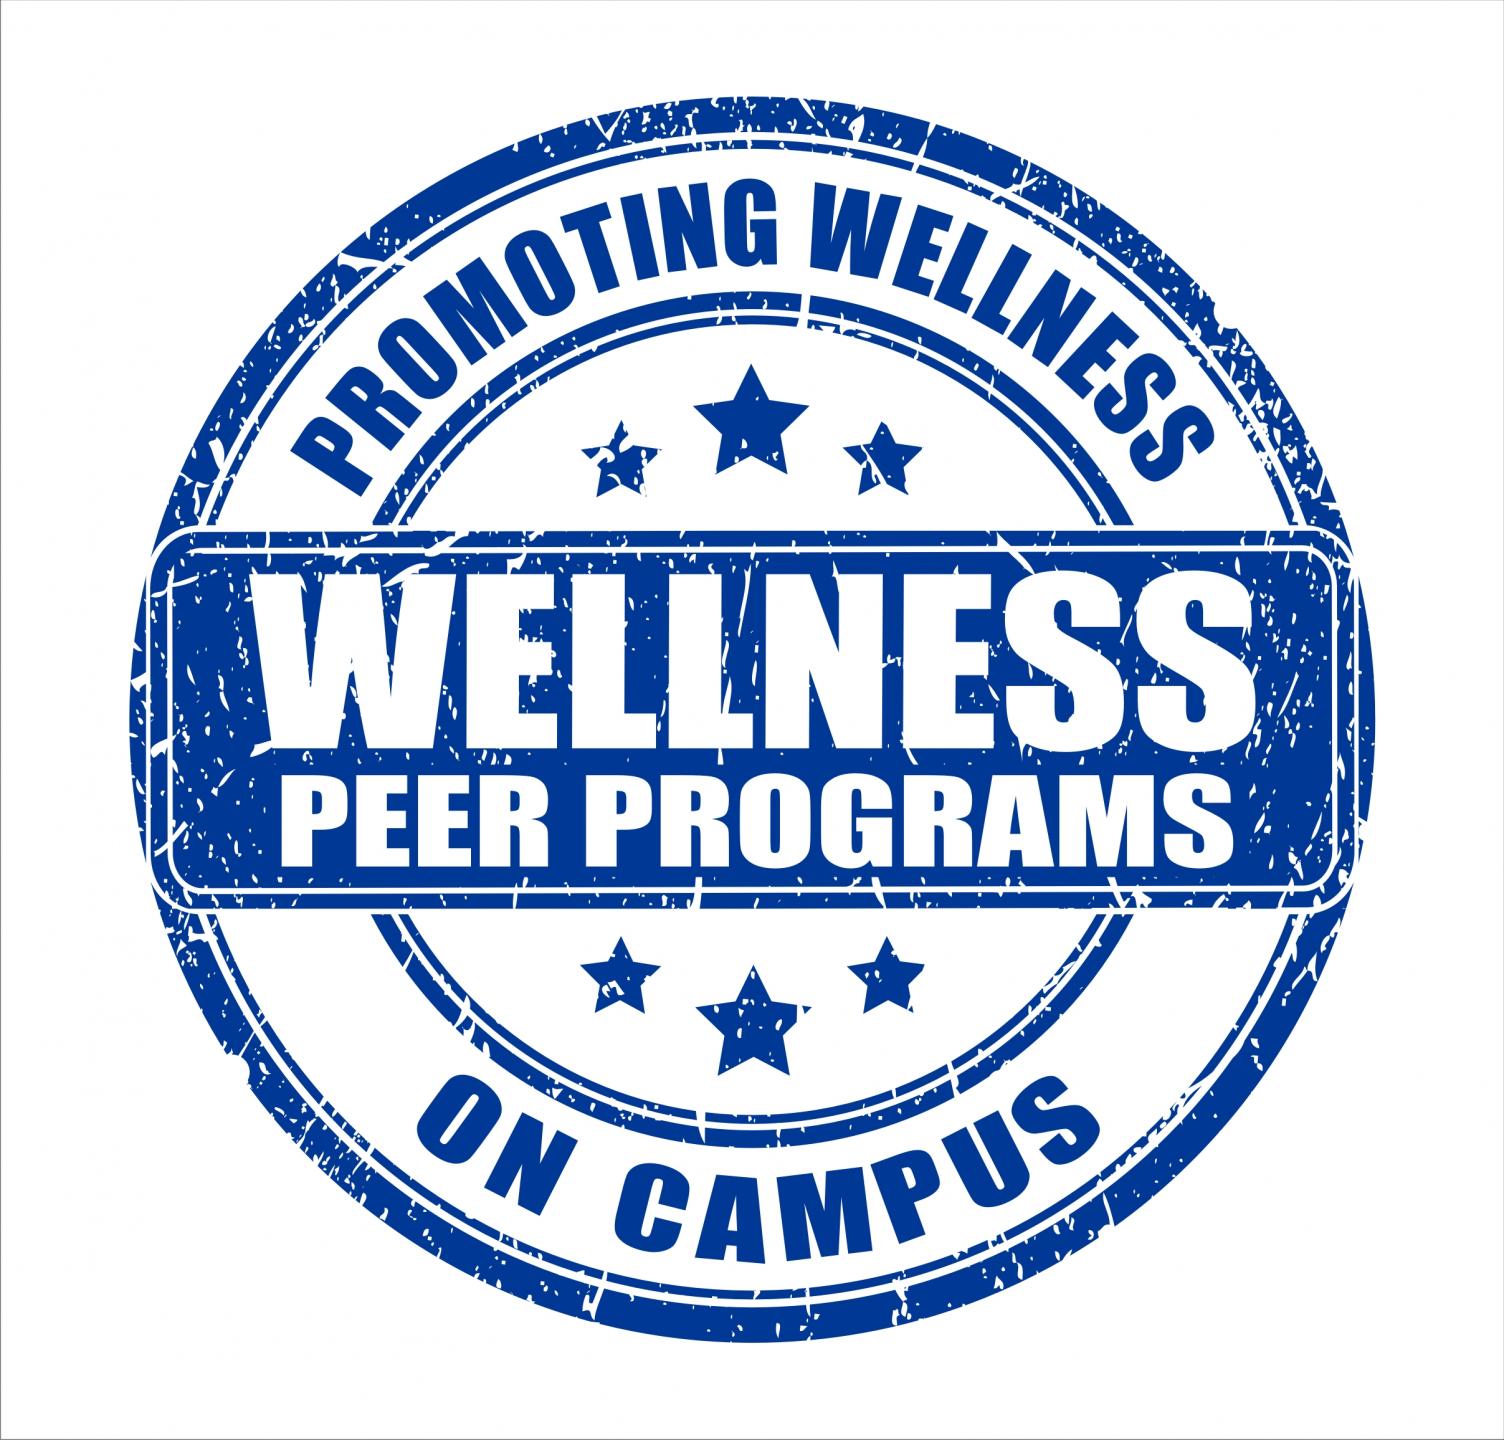 Promoting wellness peer programs on campus